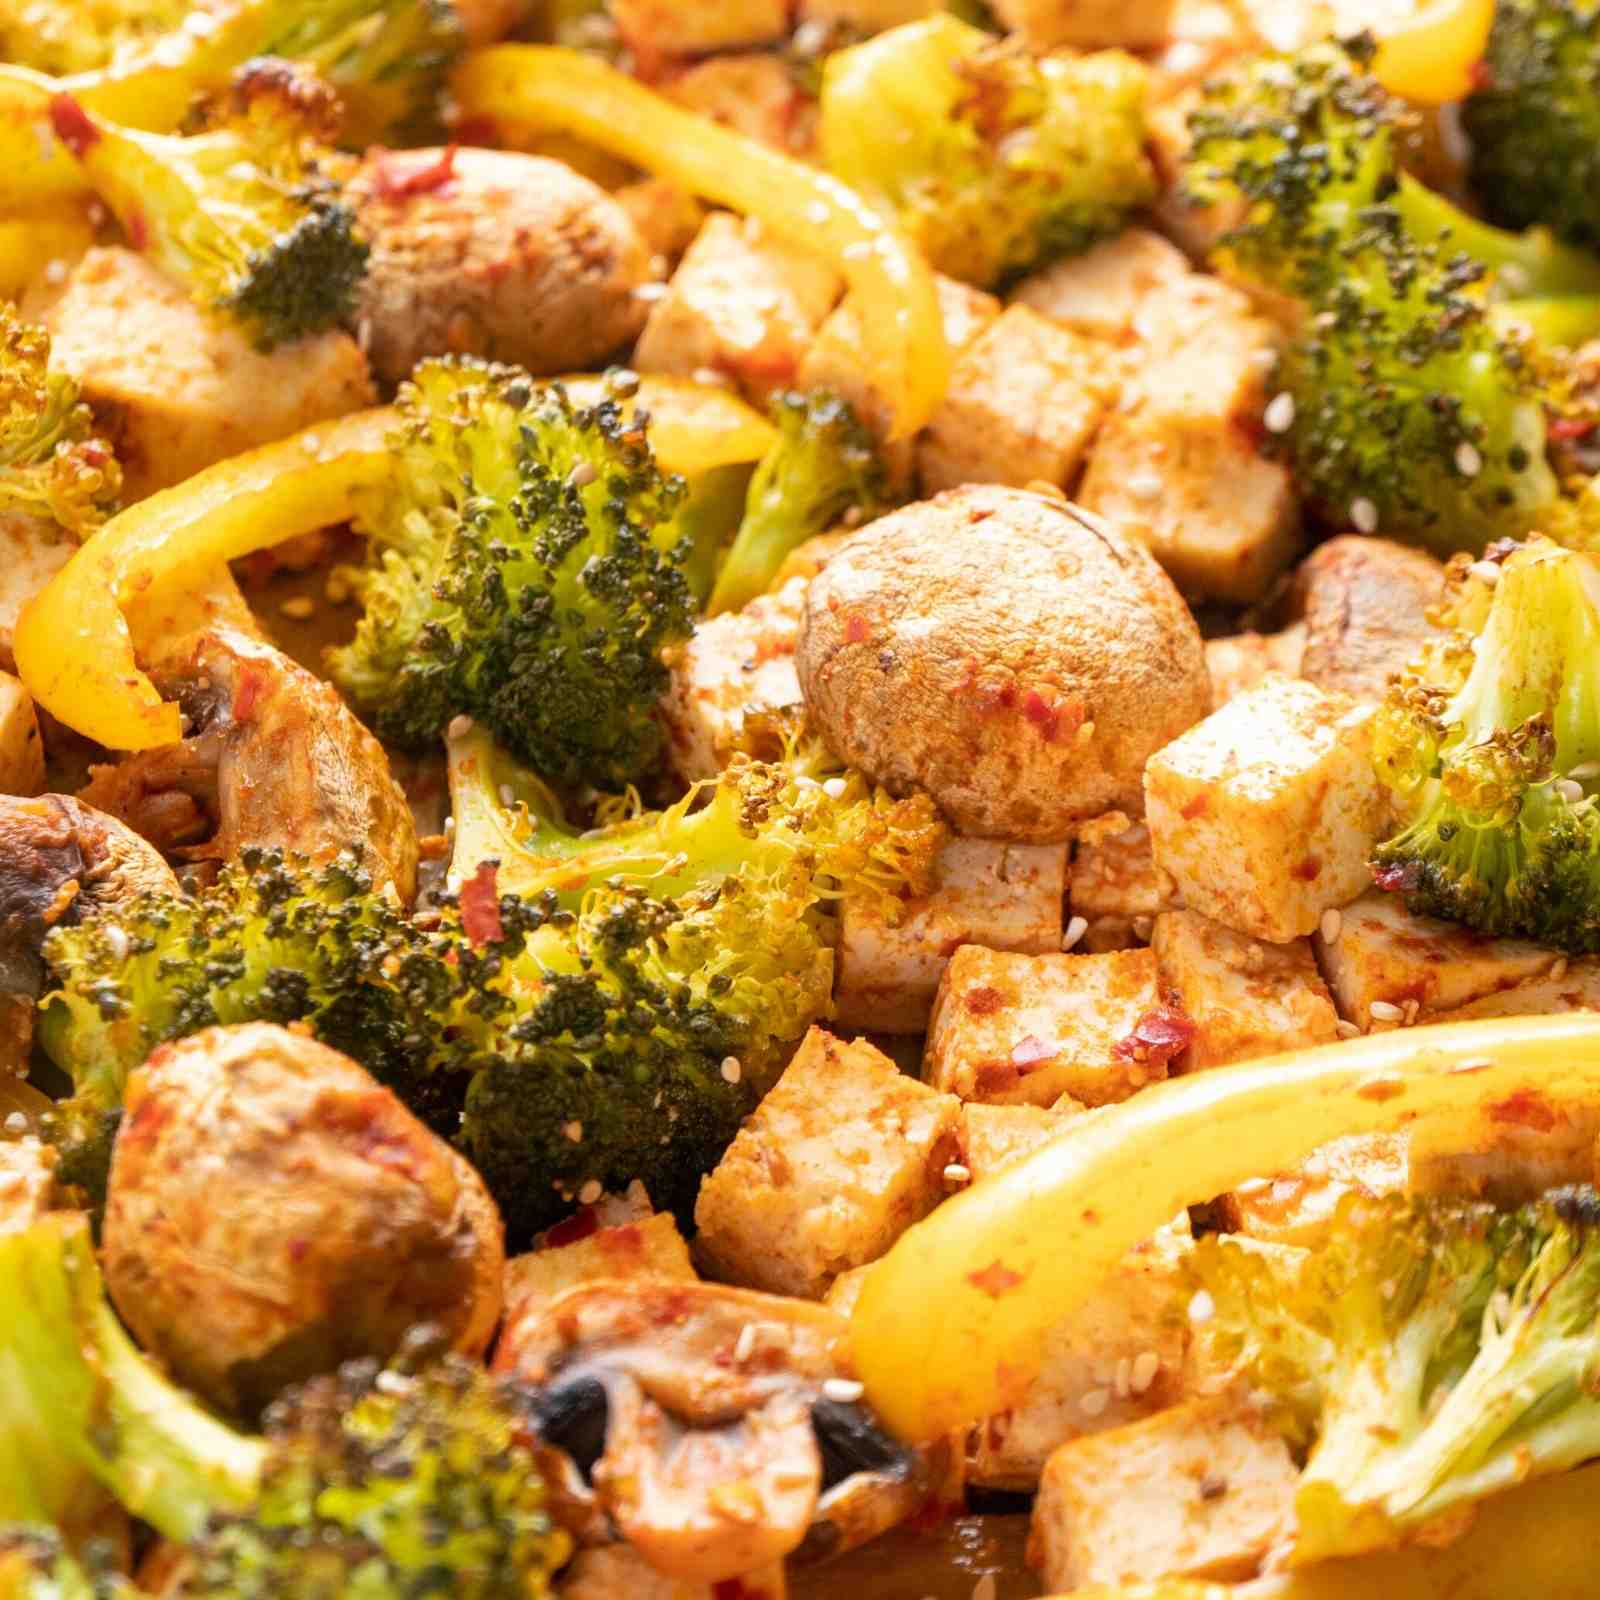 Veganes Low Carb Tofu-Gemüse-Blech mit Sambal Oelek zum ketogenen Abendessen ohne Kohlenhydrate Mobile Featured Image